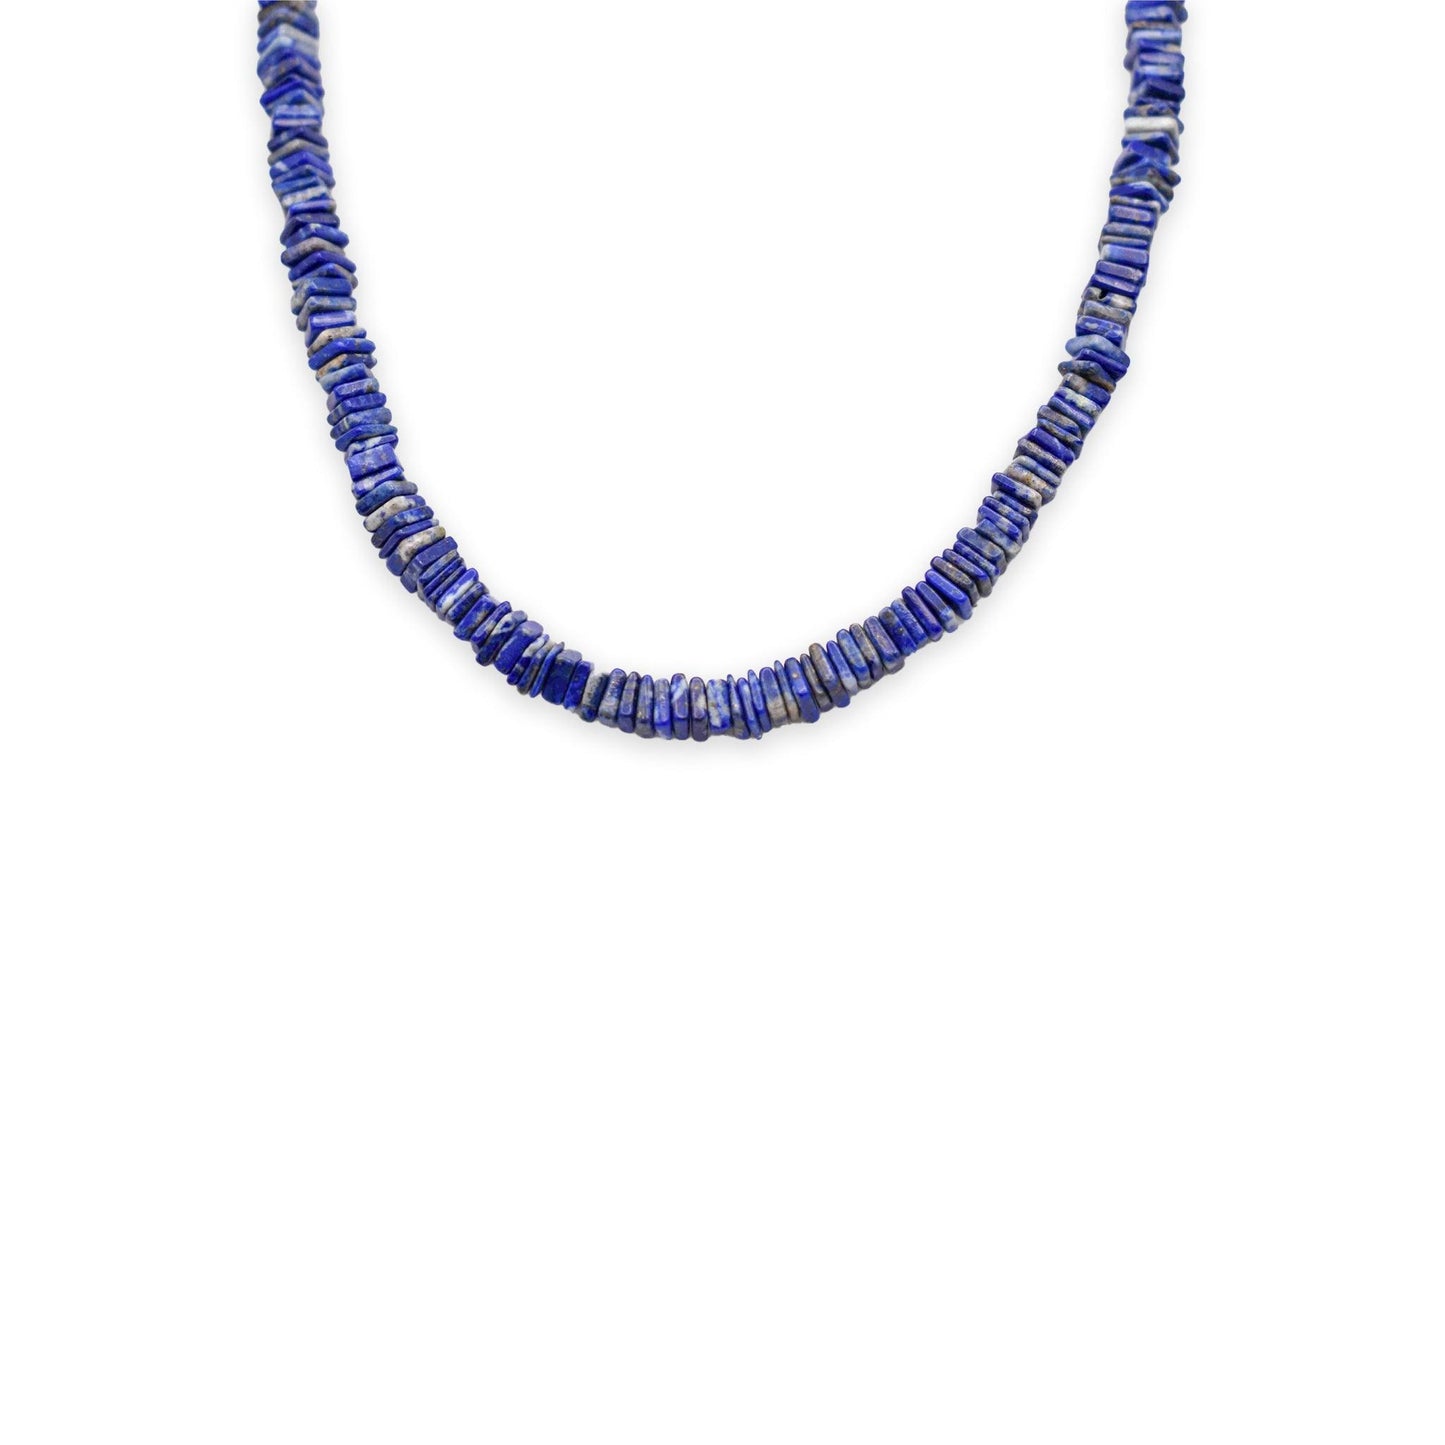 Lapis lazuli Heishi beads necklace on jewelry display 